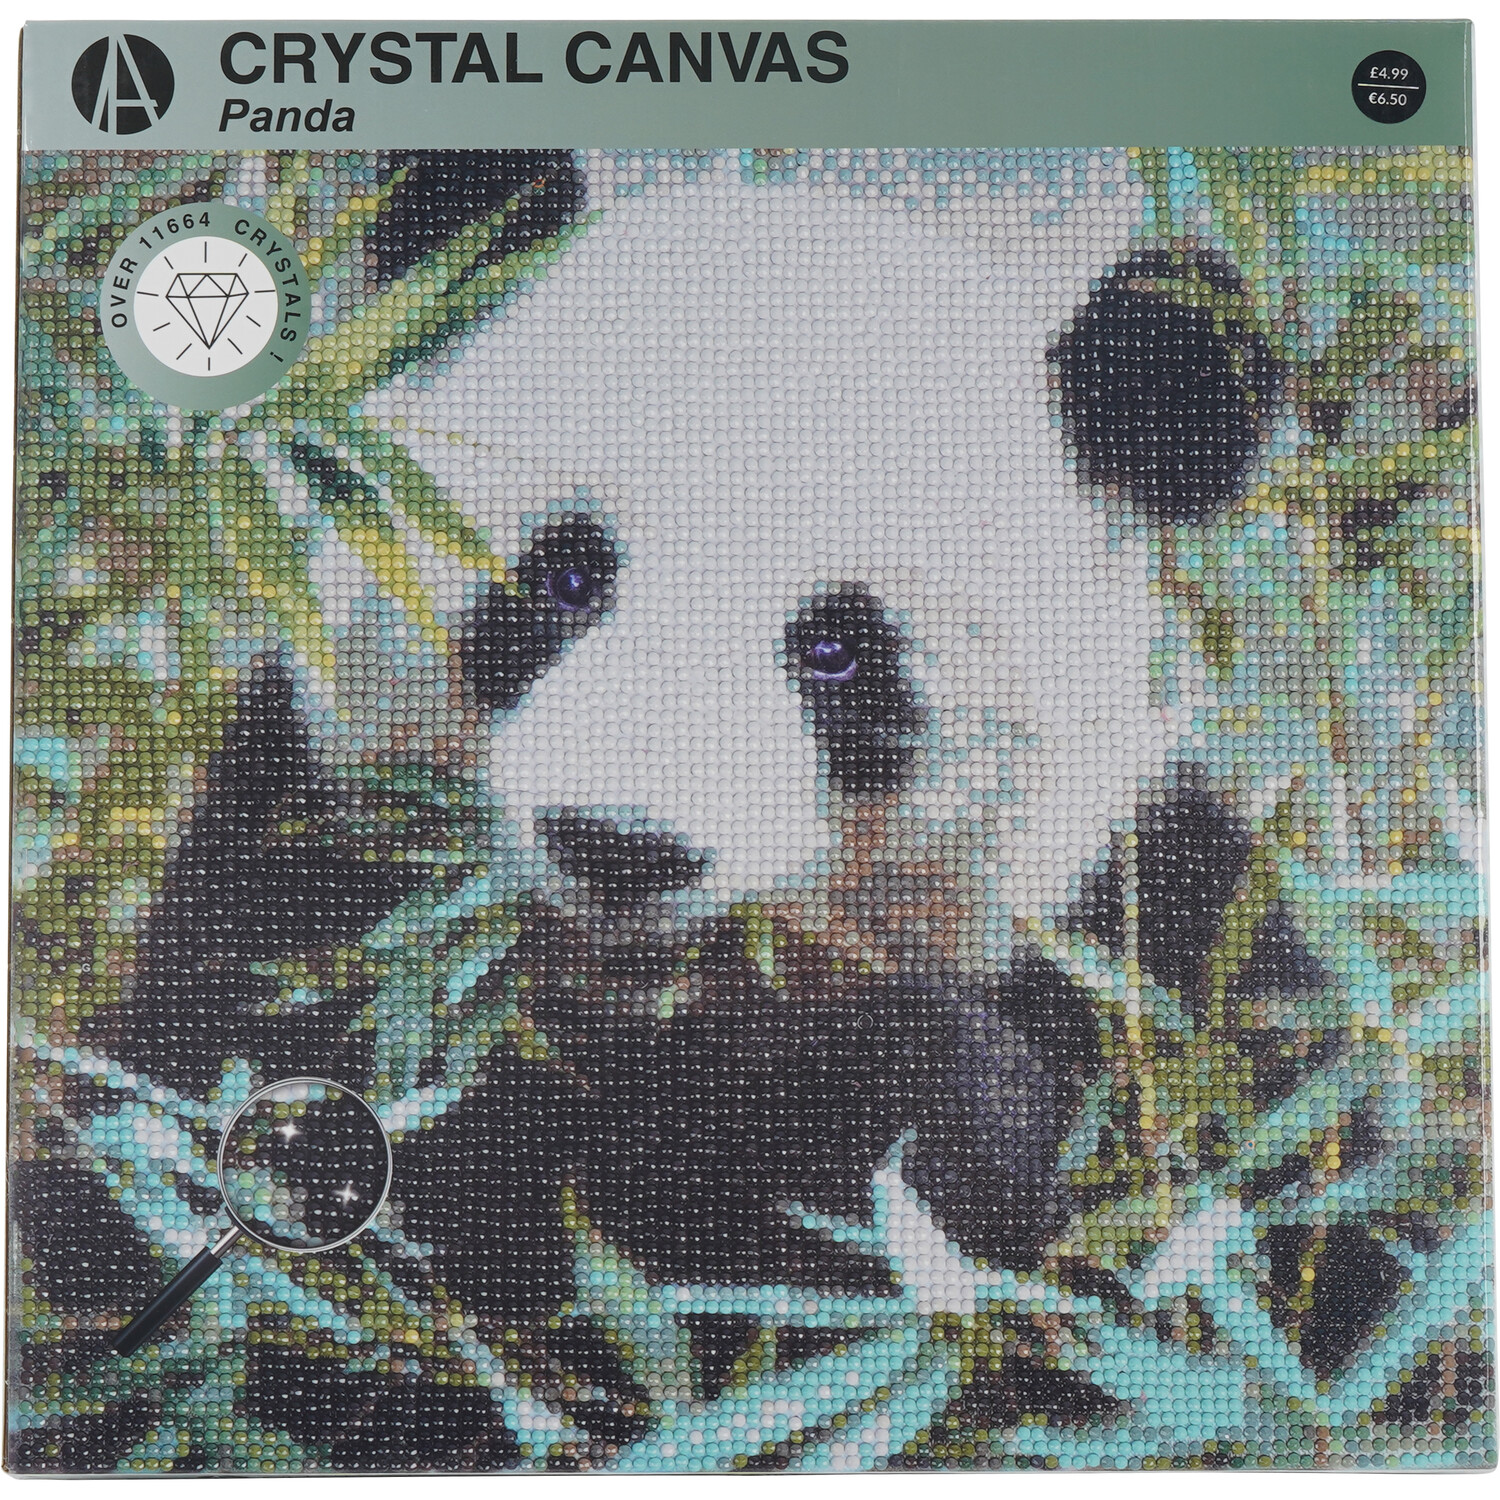 Crystal Canvas Giraffes or Panda Image 4